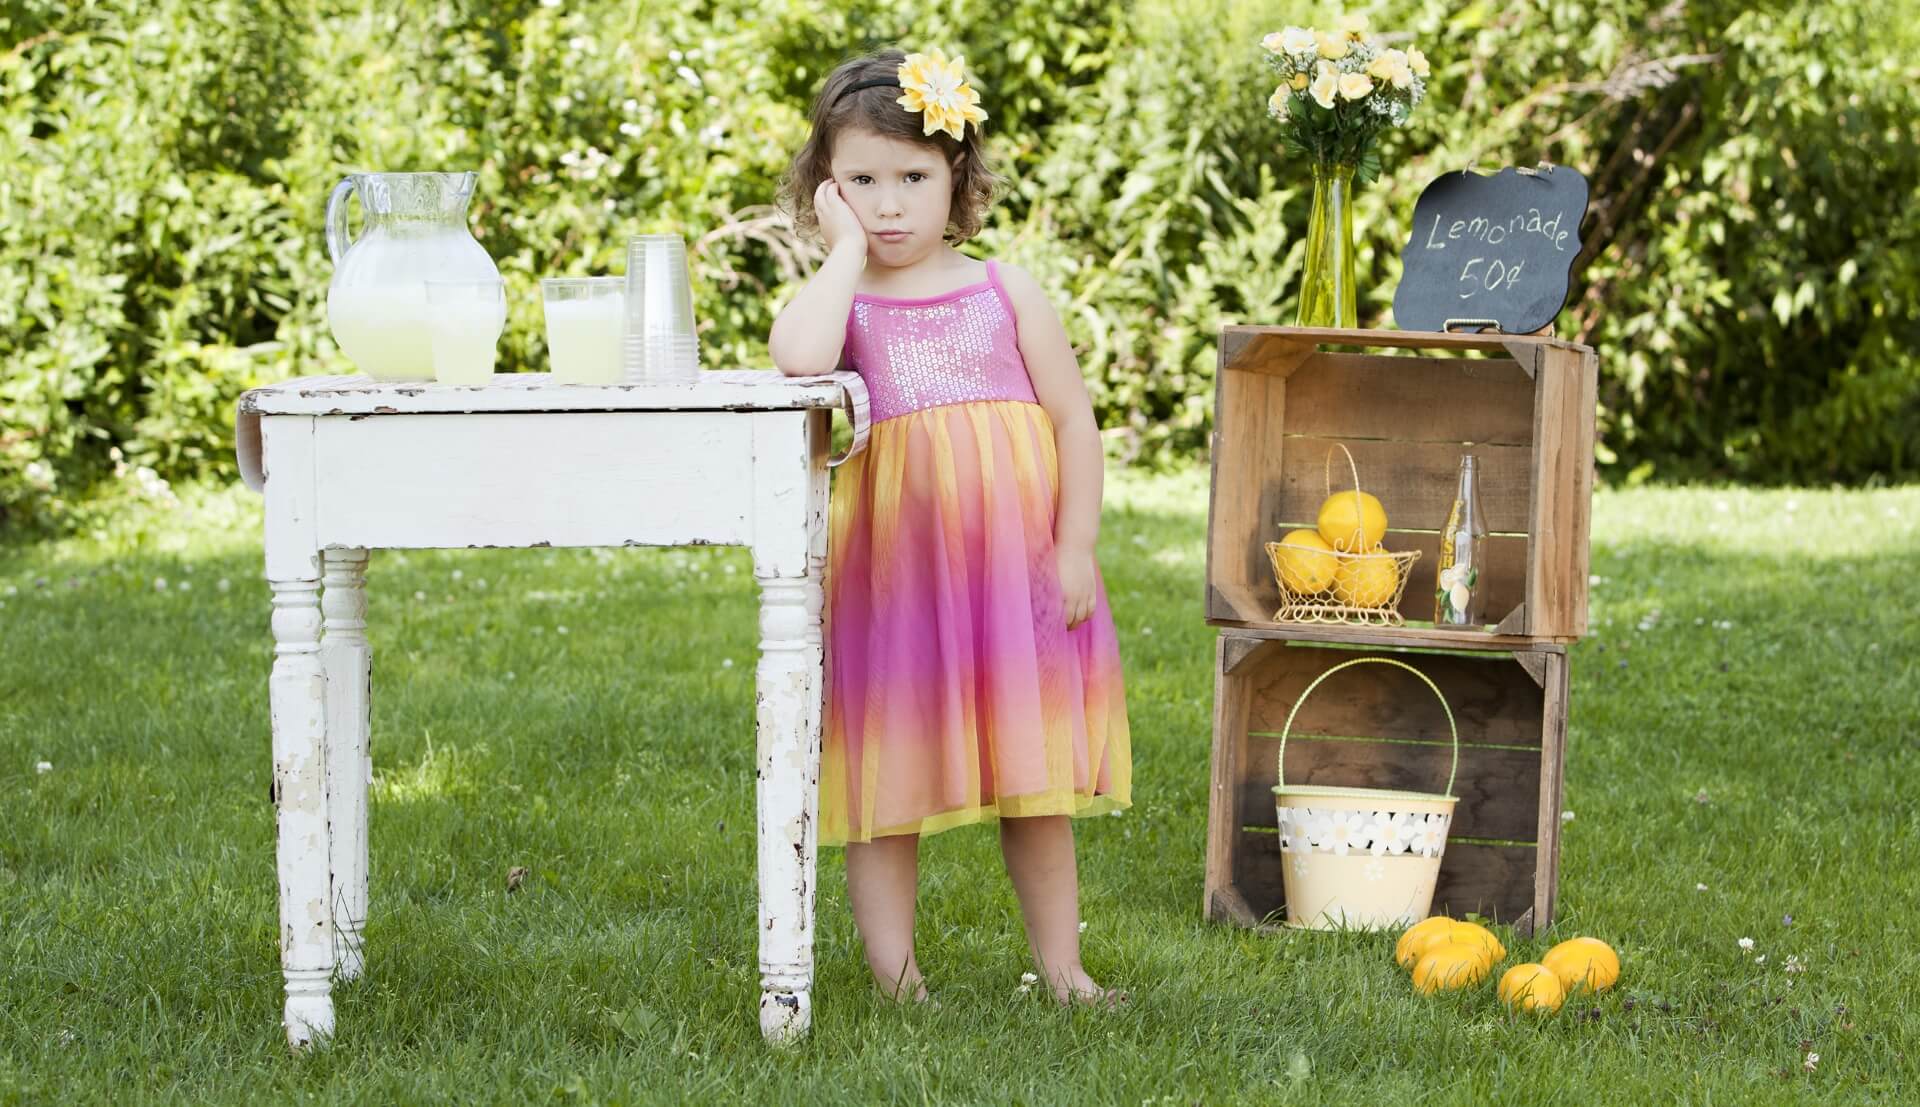 a child selling lemonade